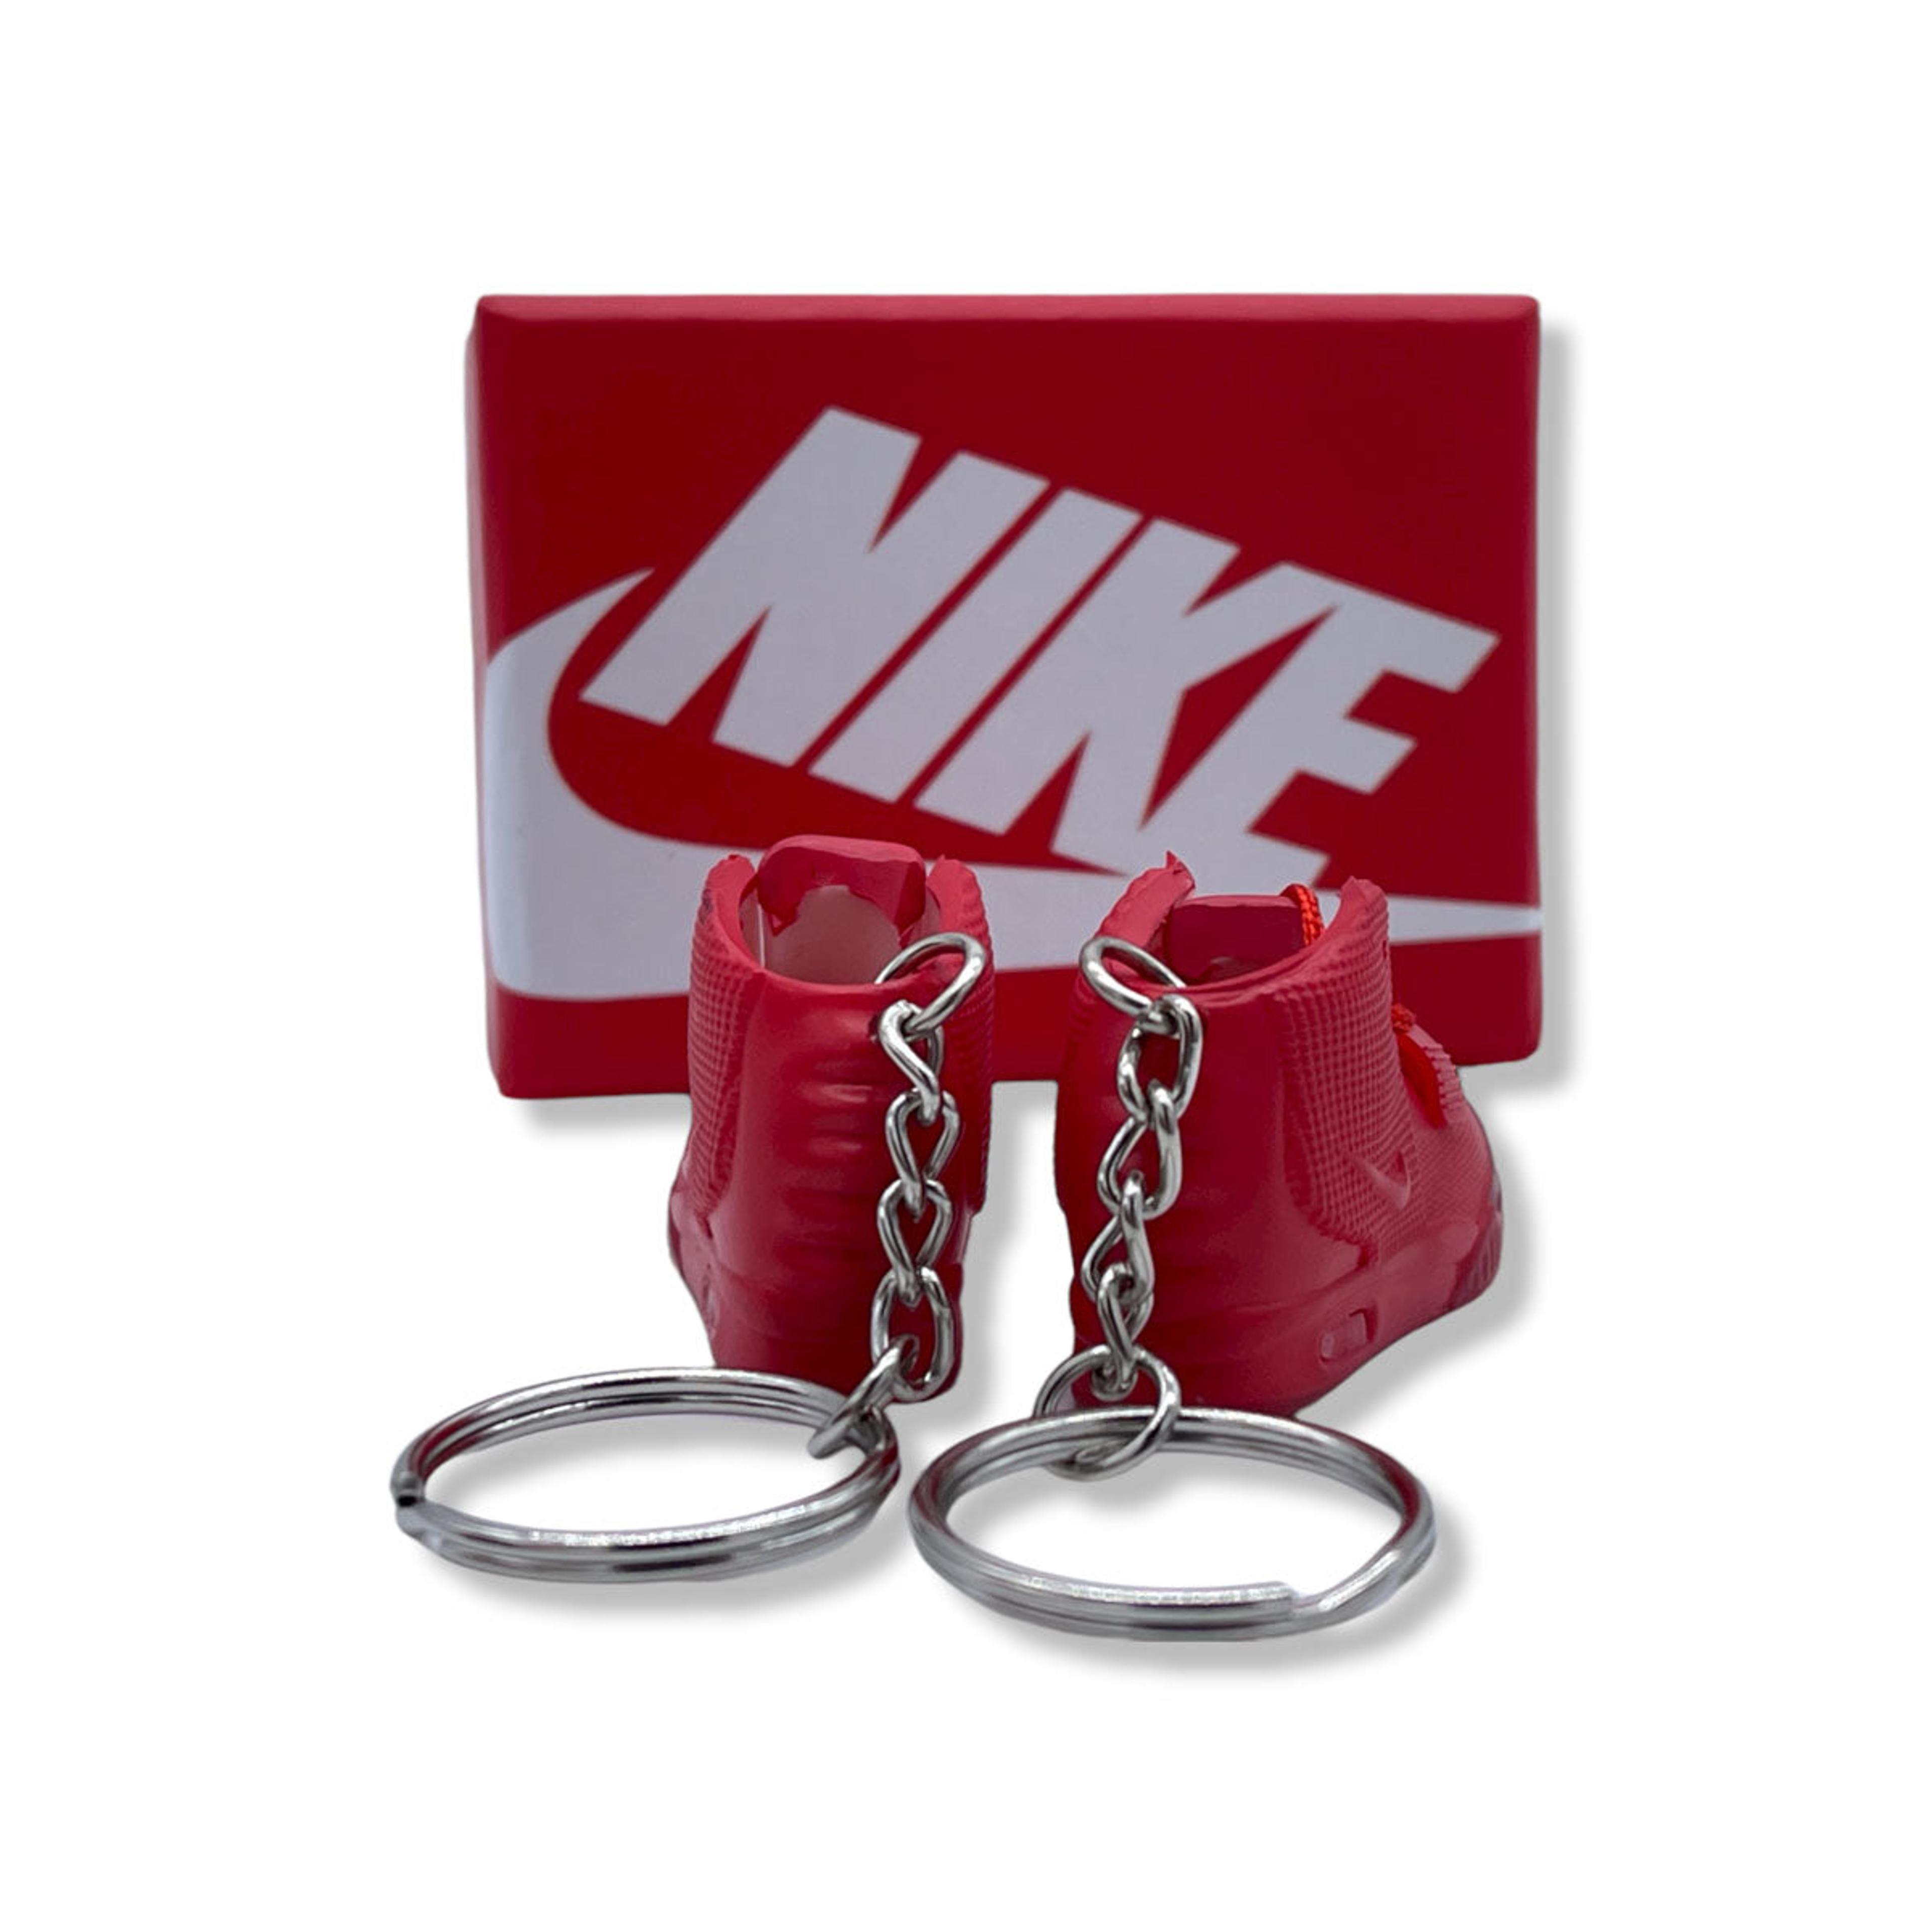 Alternate View 2 of 3D Sneaker Keychain- Nike Air Yeezy 2 Red October Pair